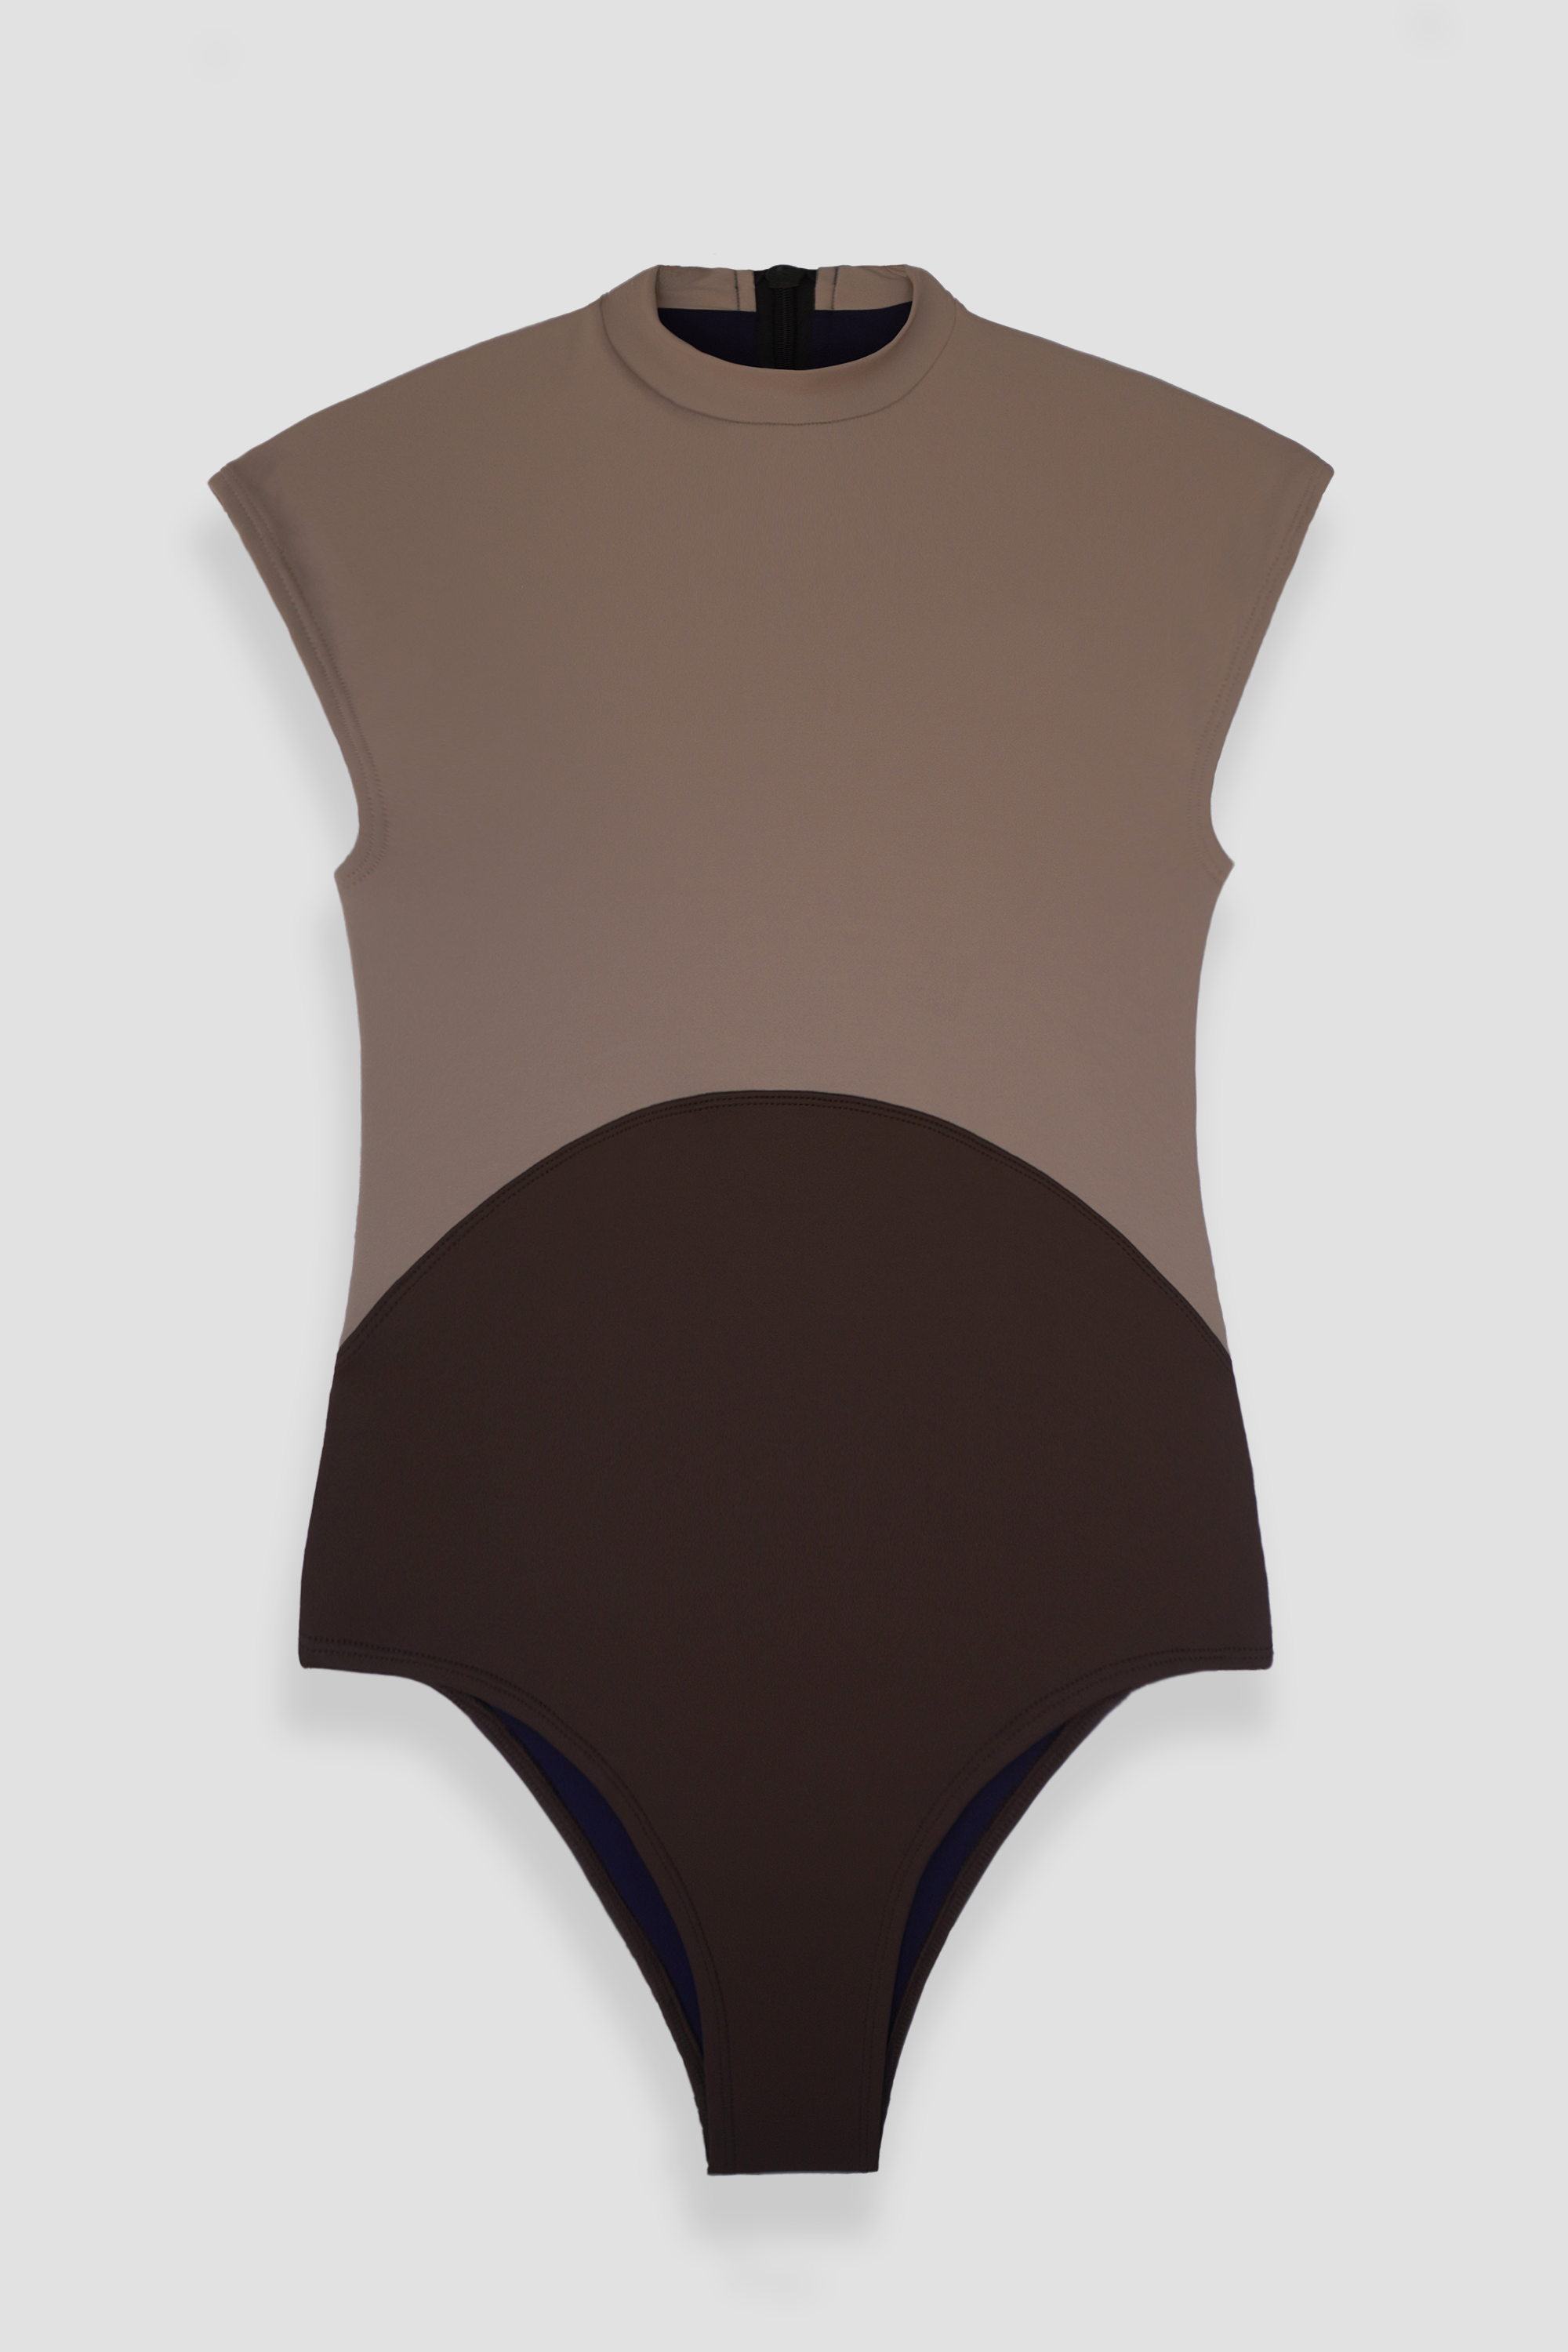 Ninefoot Studio Marosi surf swimsuit onepiece in arabica brown | One piece